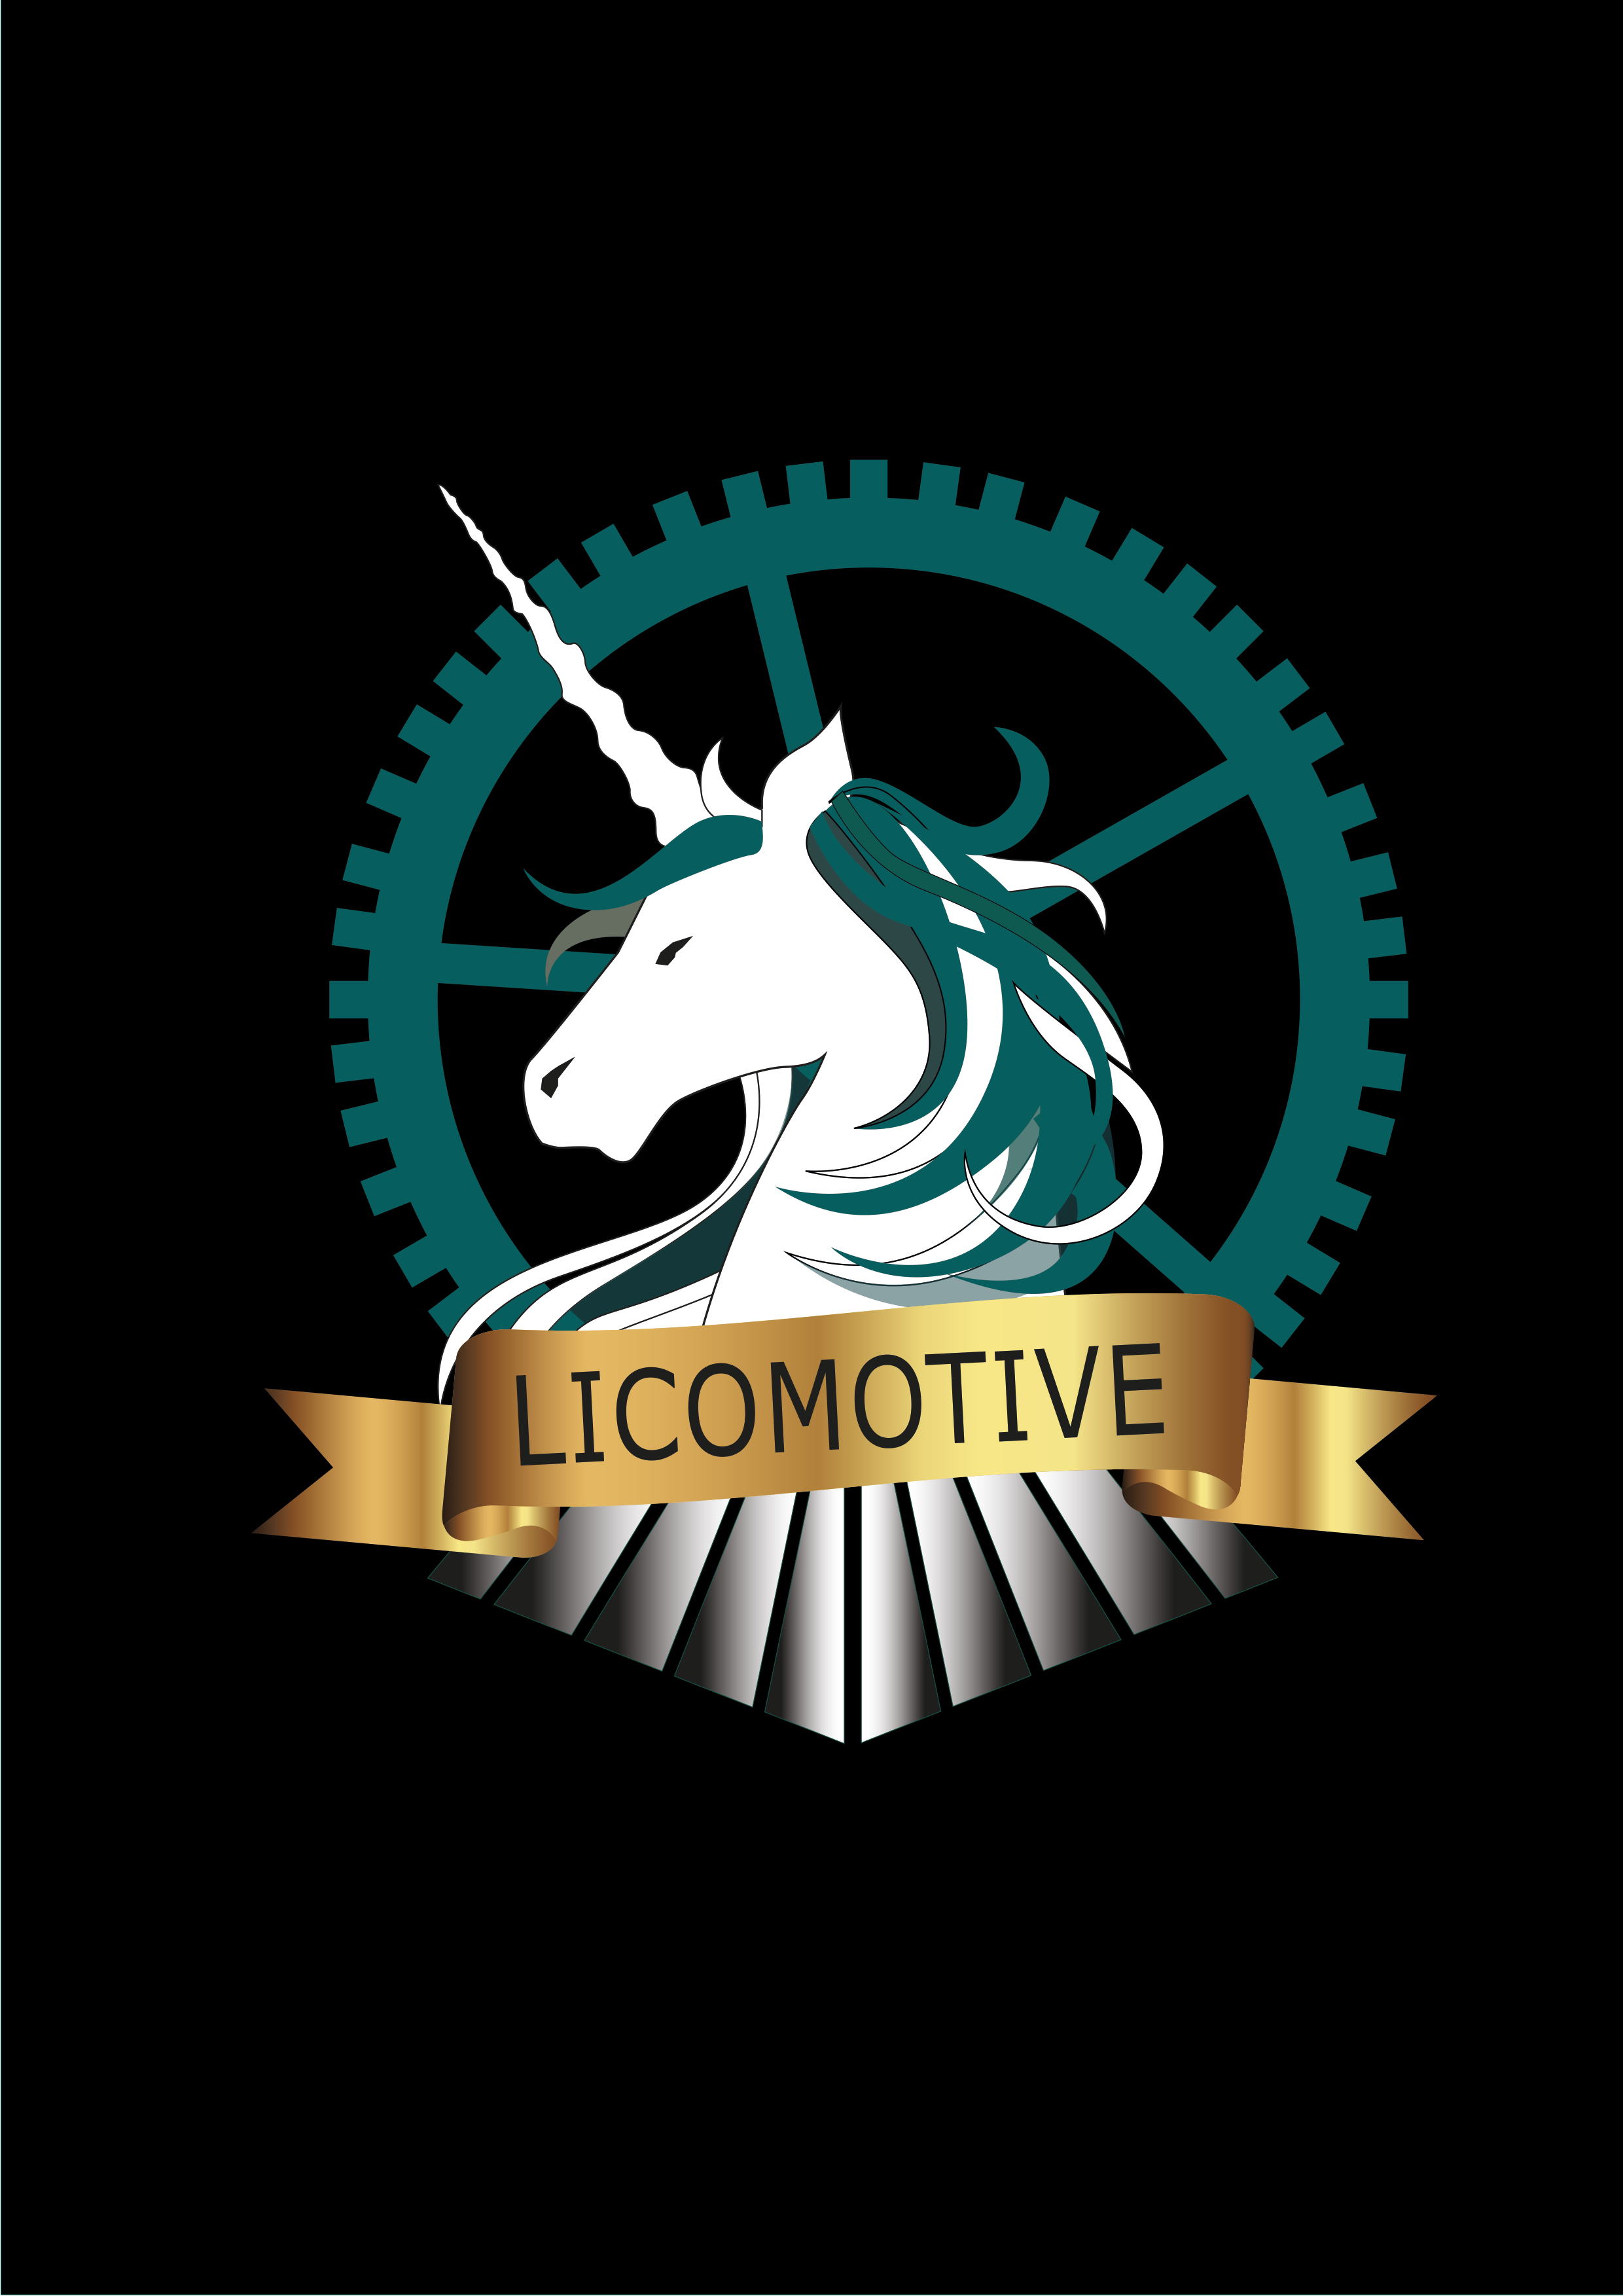 Logo licomotive représentant une licorne